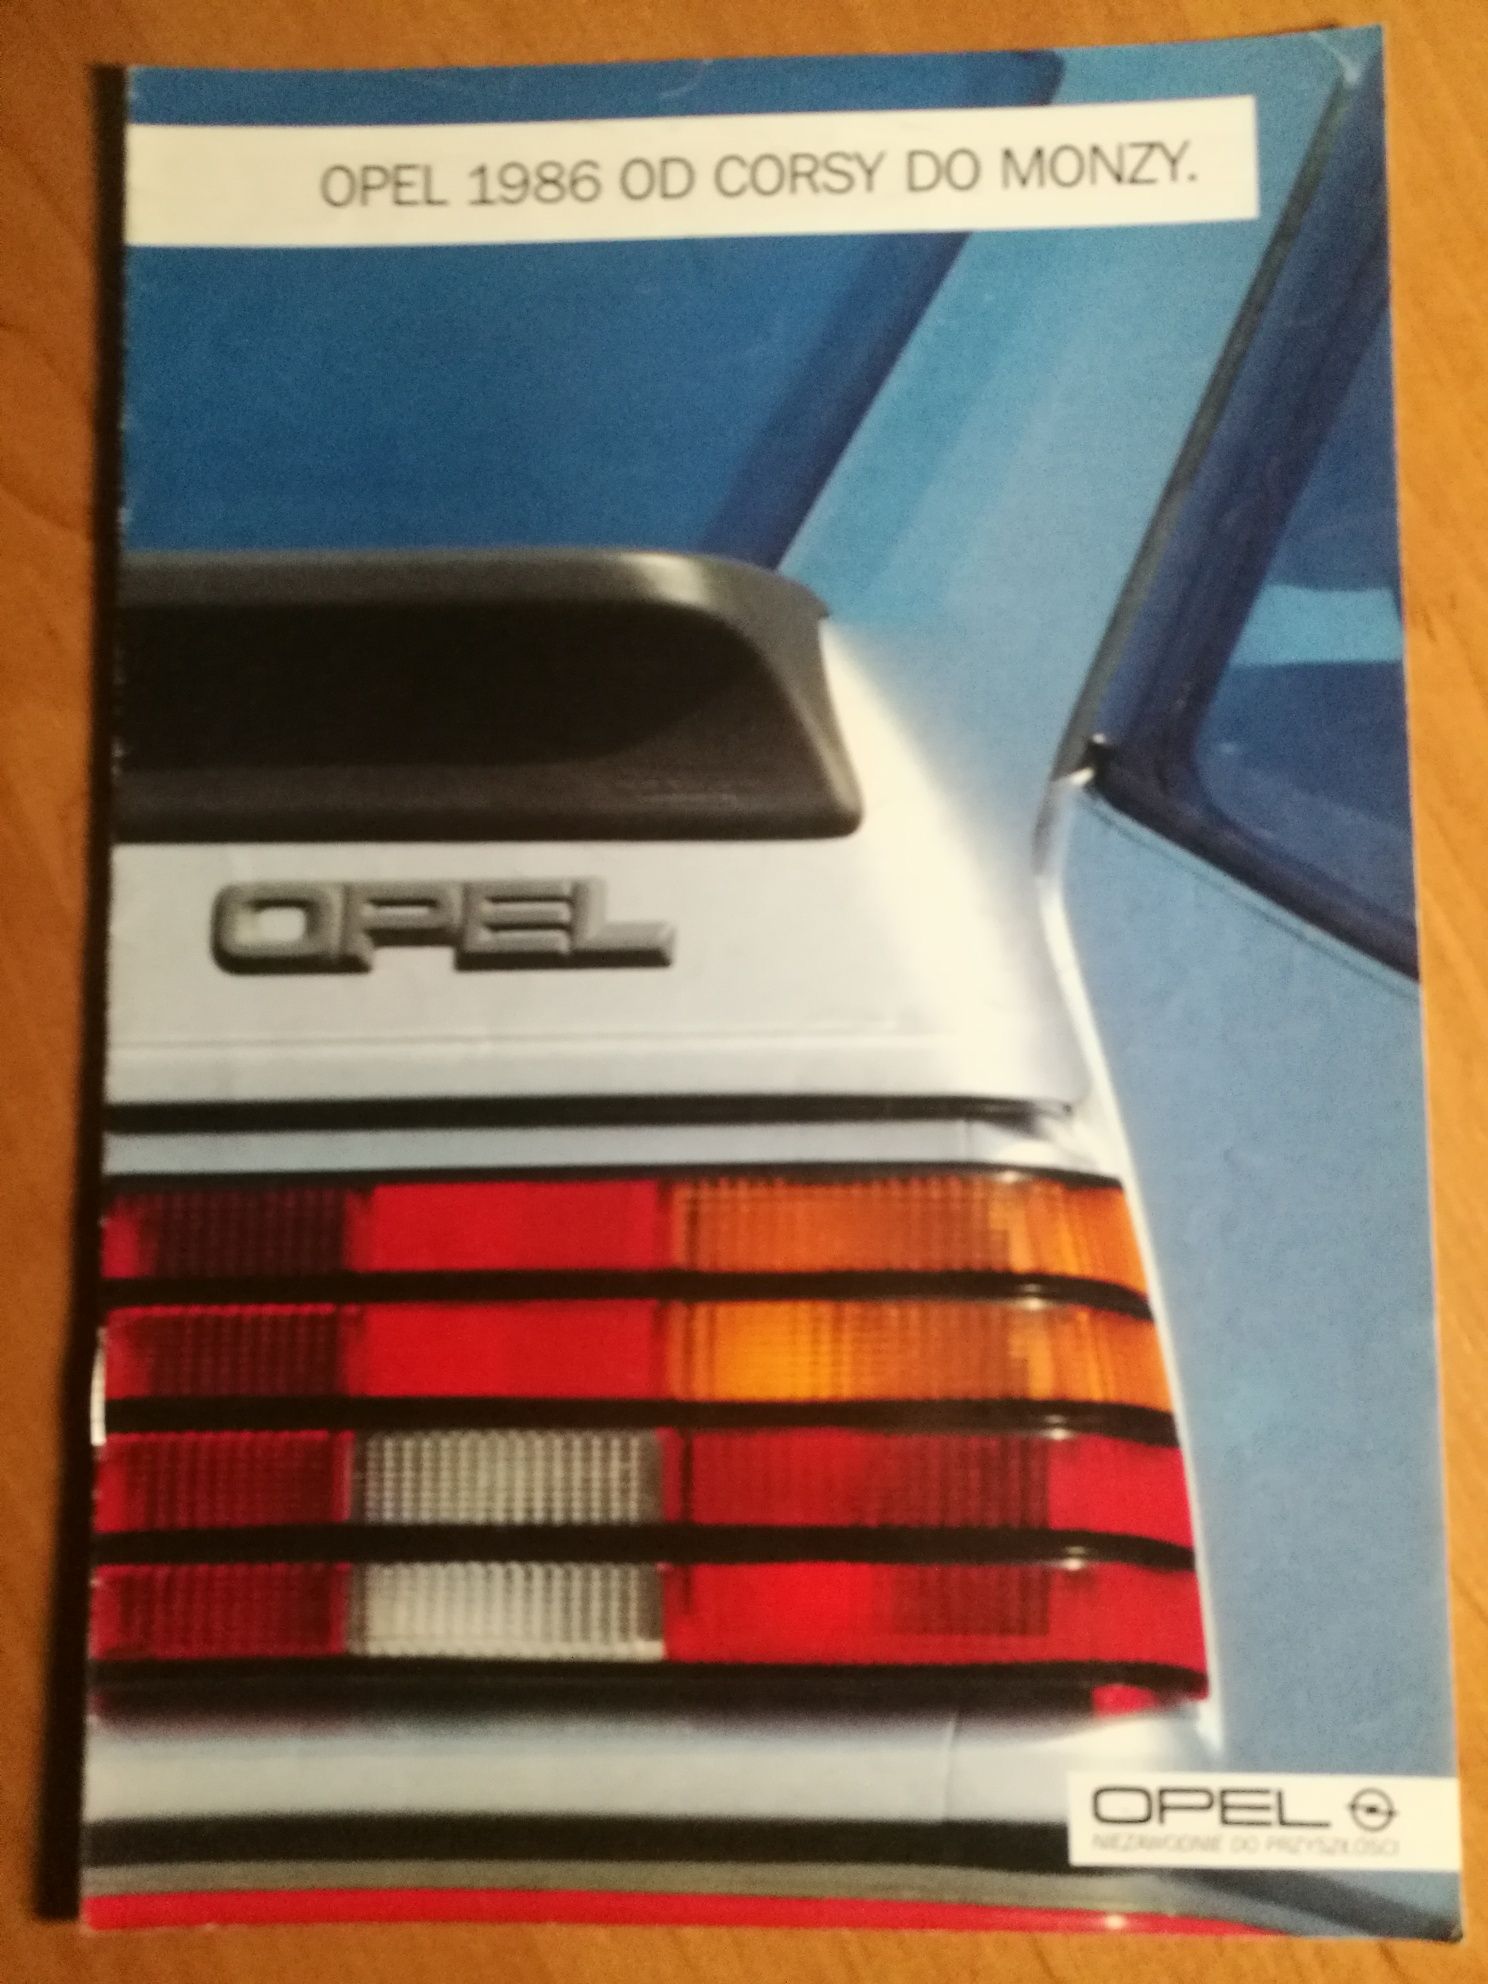 Prospekt Opel 1986 od Corsy do Monzy